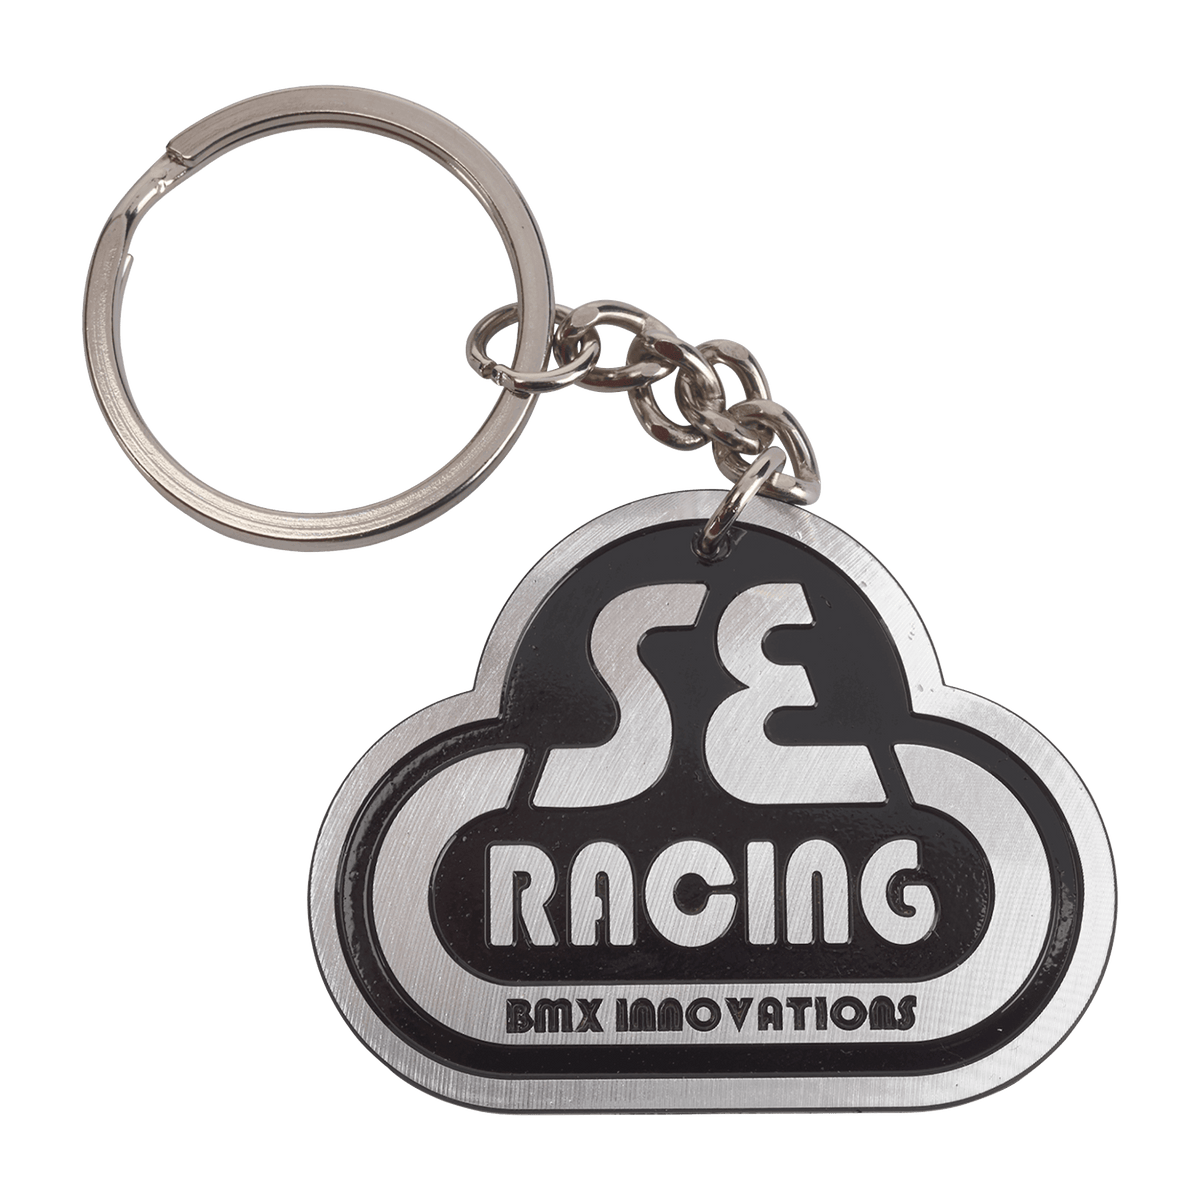 SE Racing Old School Sticker Set